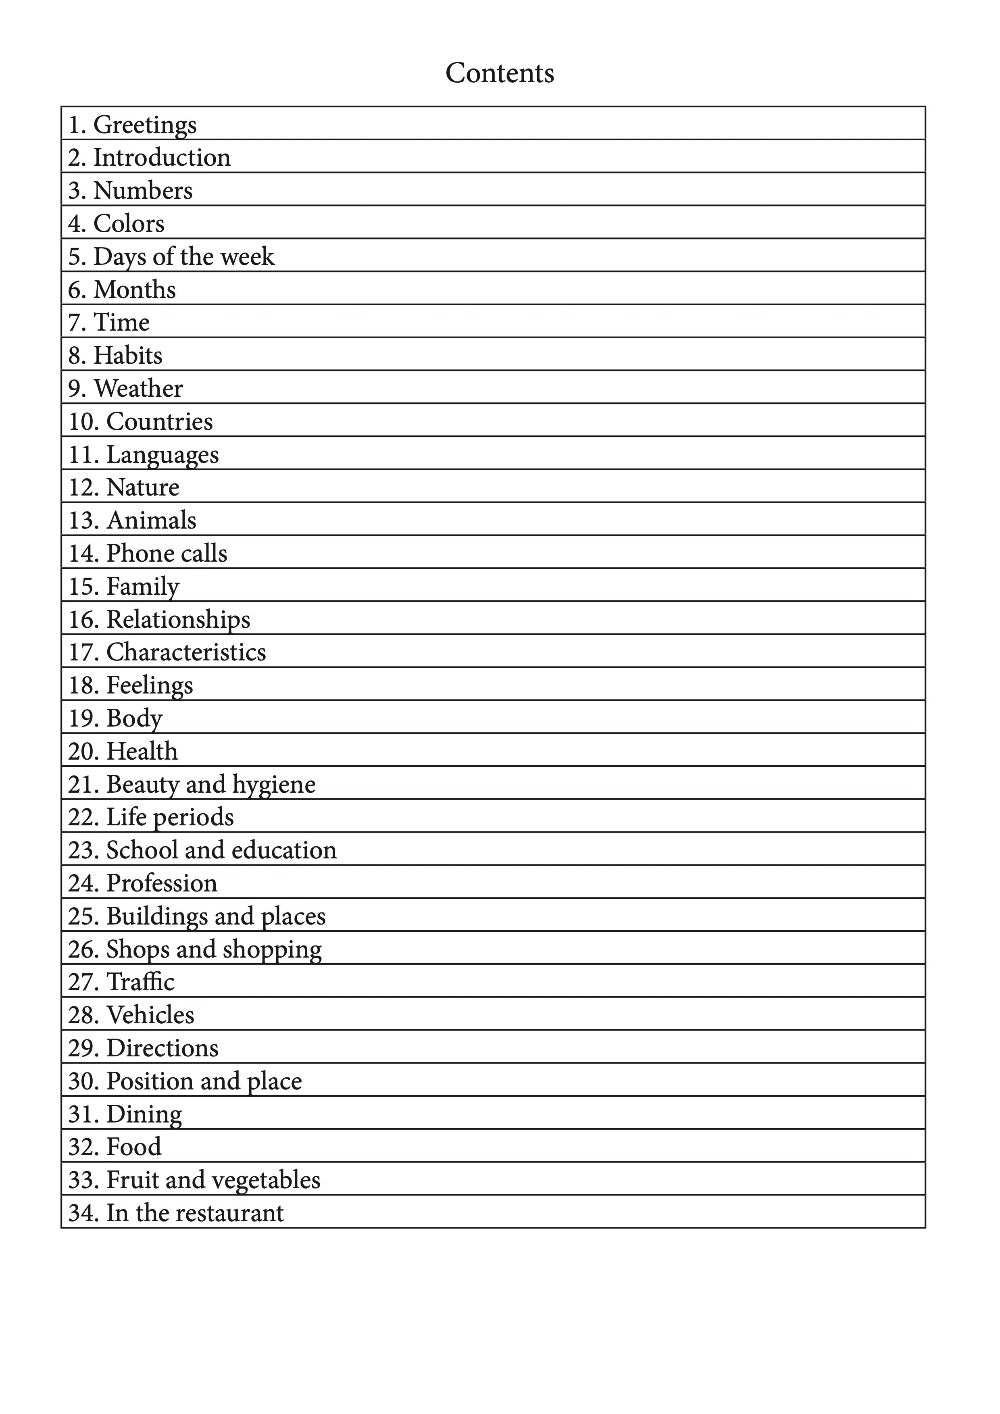 Nanai language learning notebook contents page 1